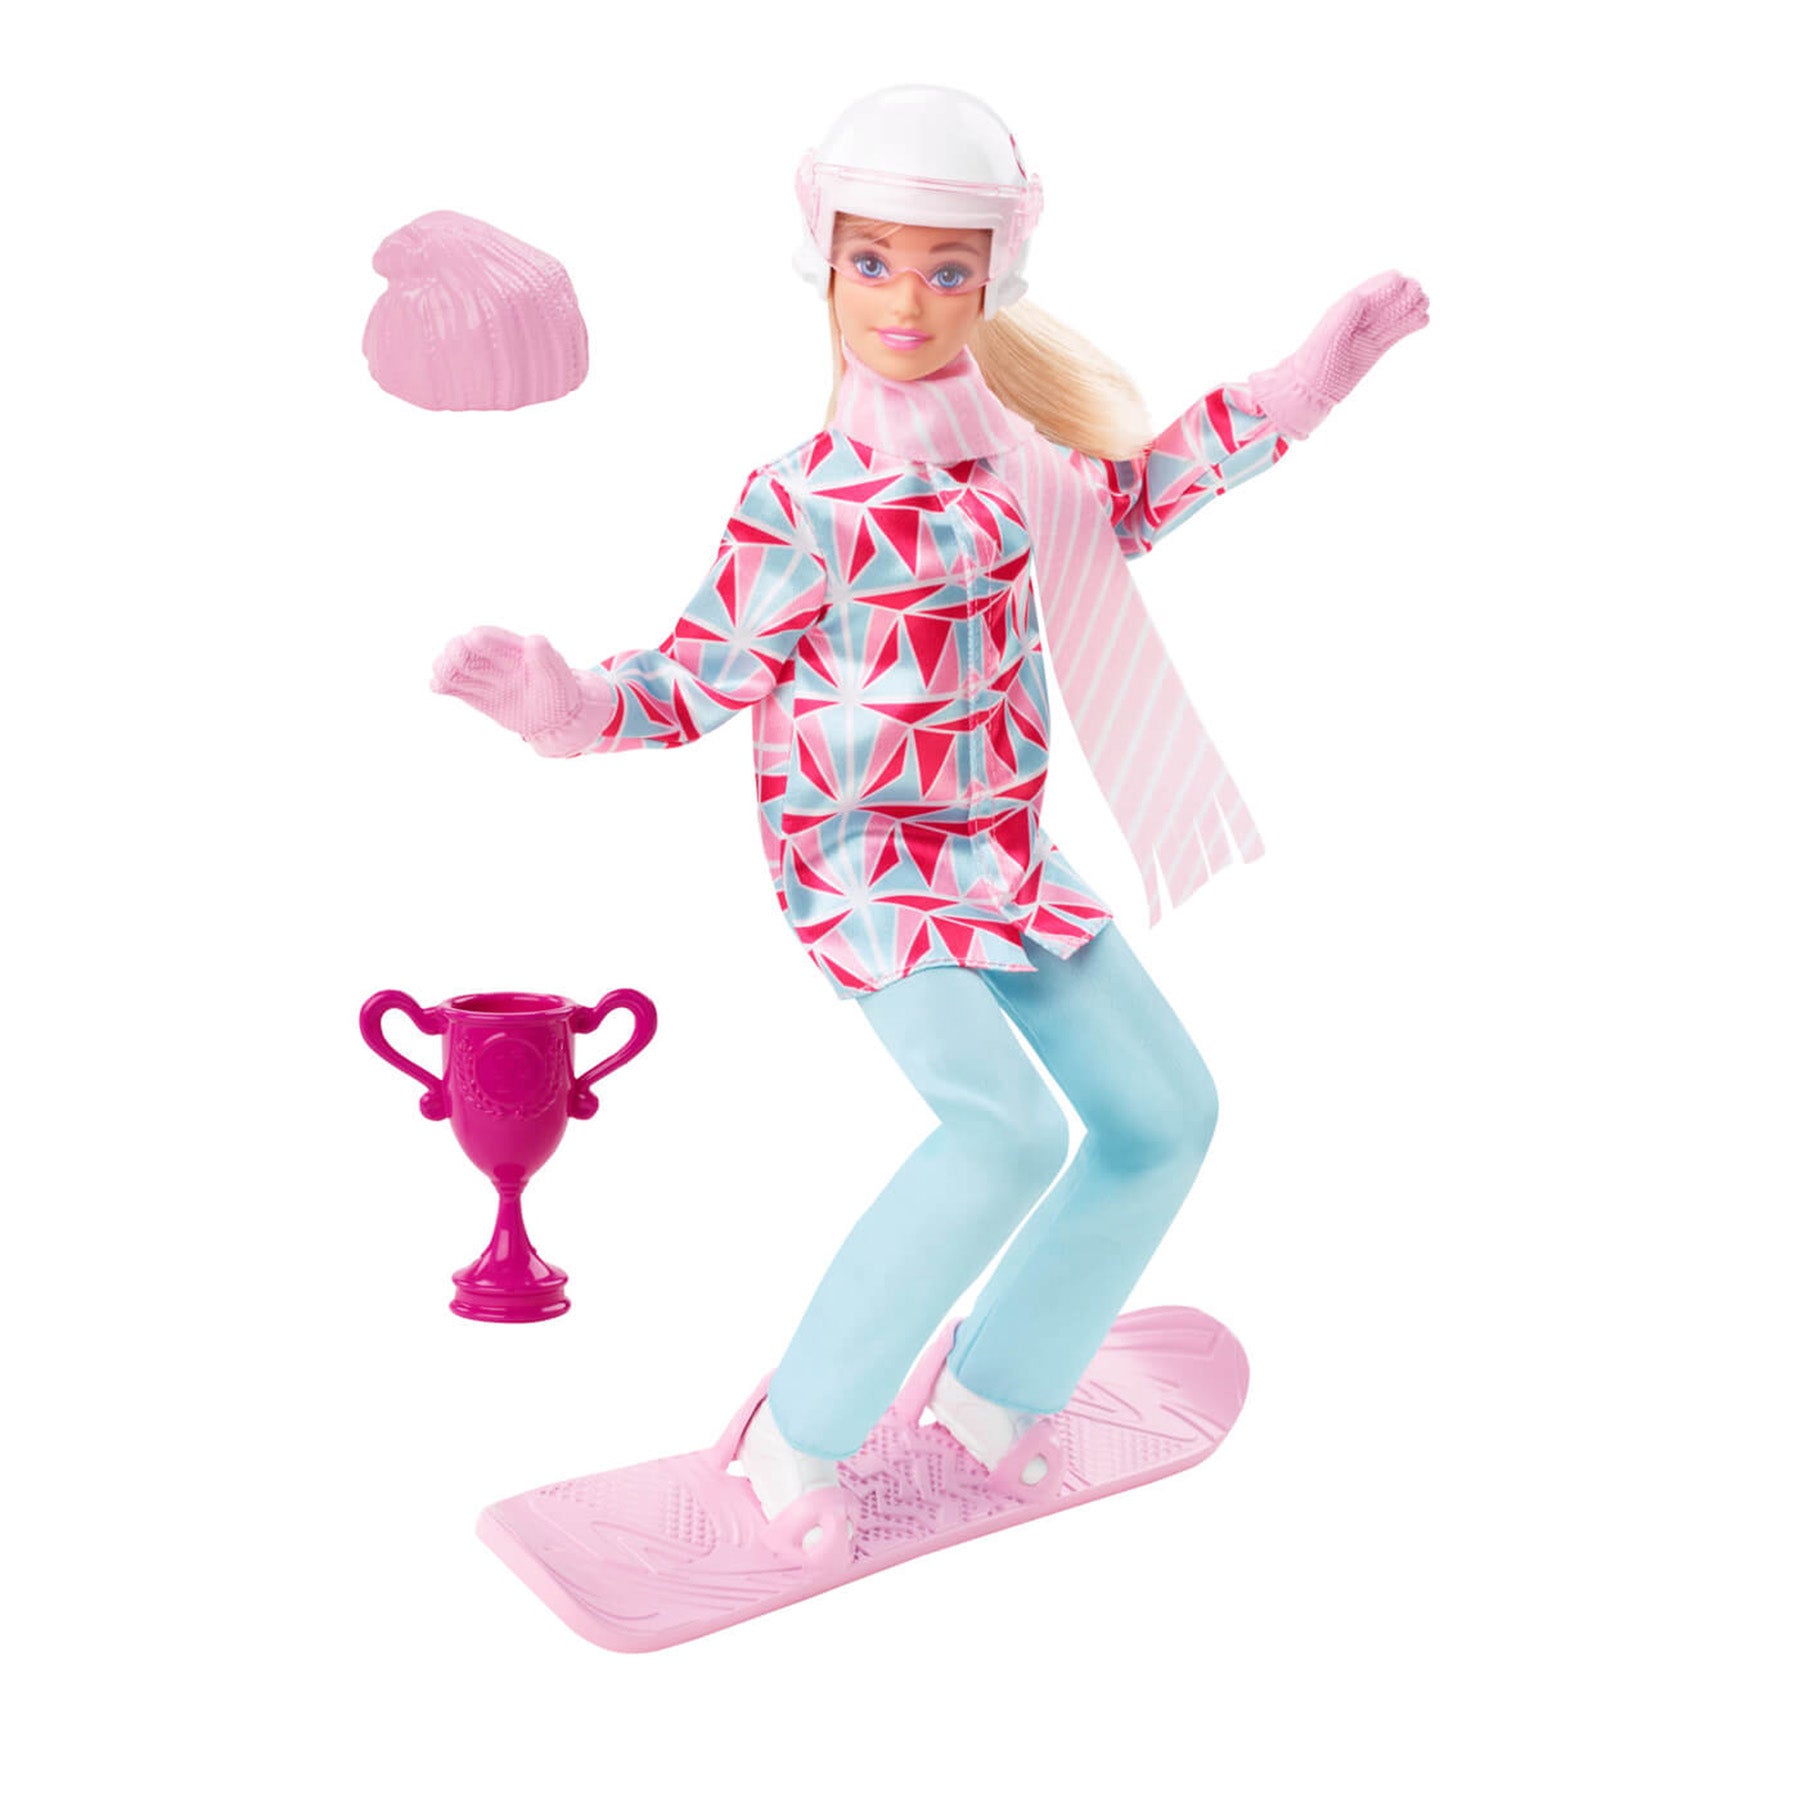 Barbie Doll - Snowboarder